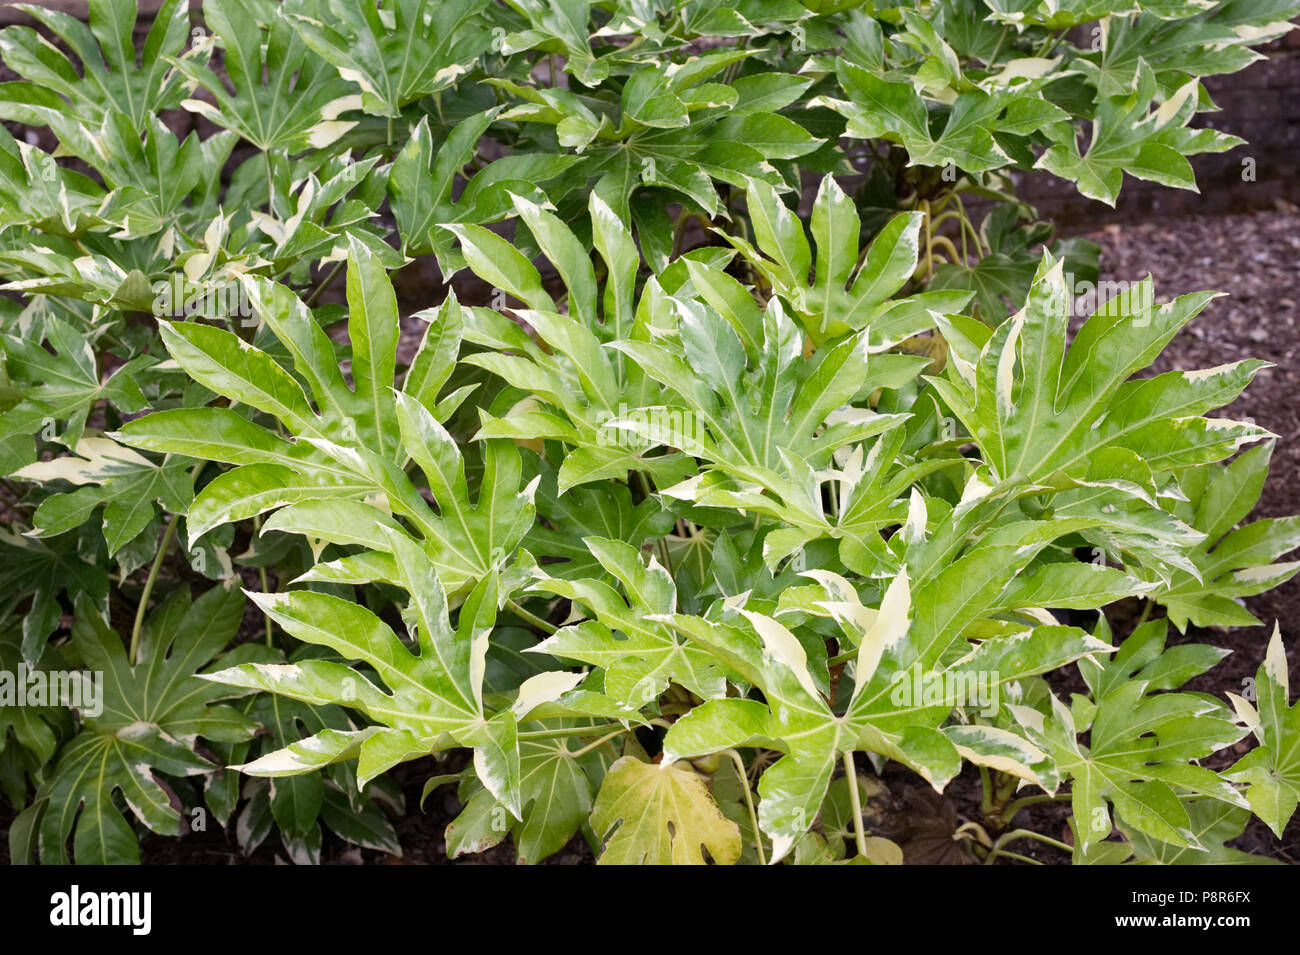 Fatsia japonica 'Variegata' plant. Stock Photo